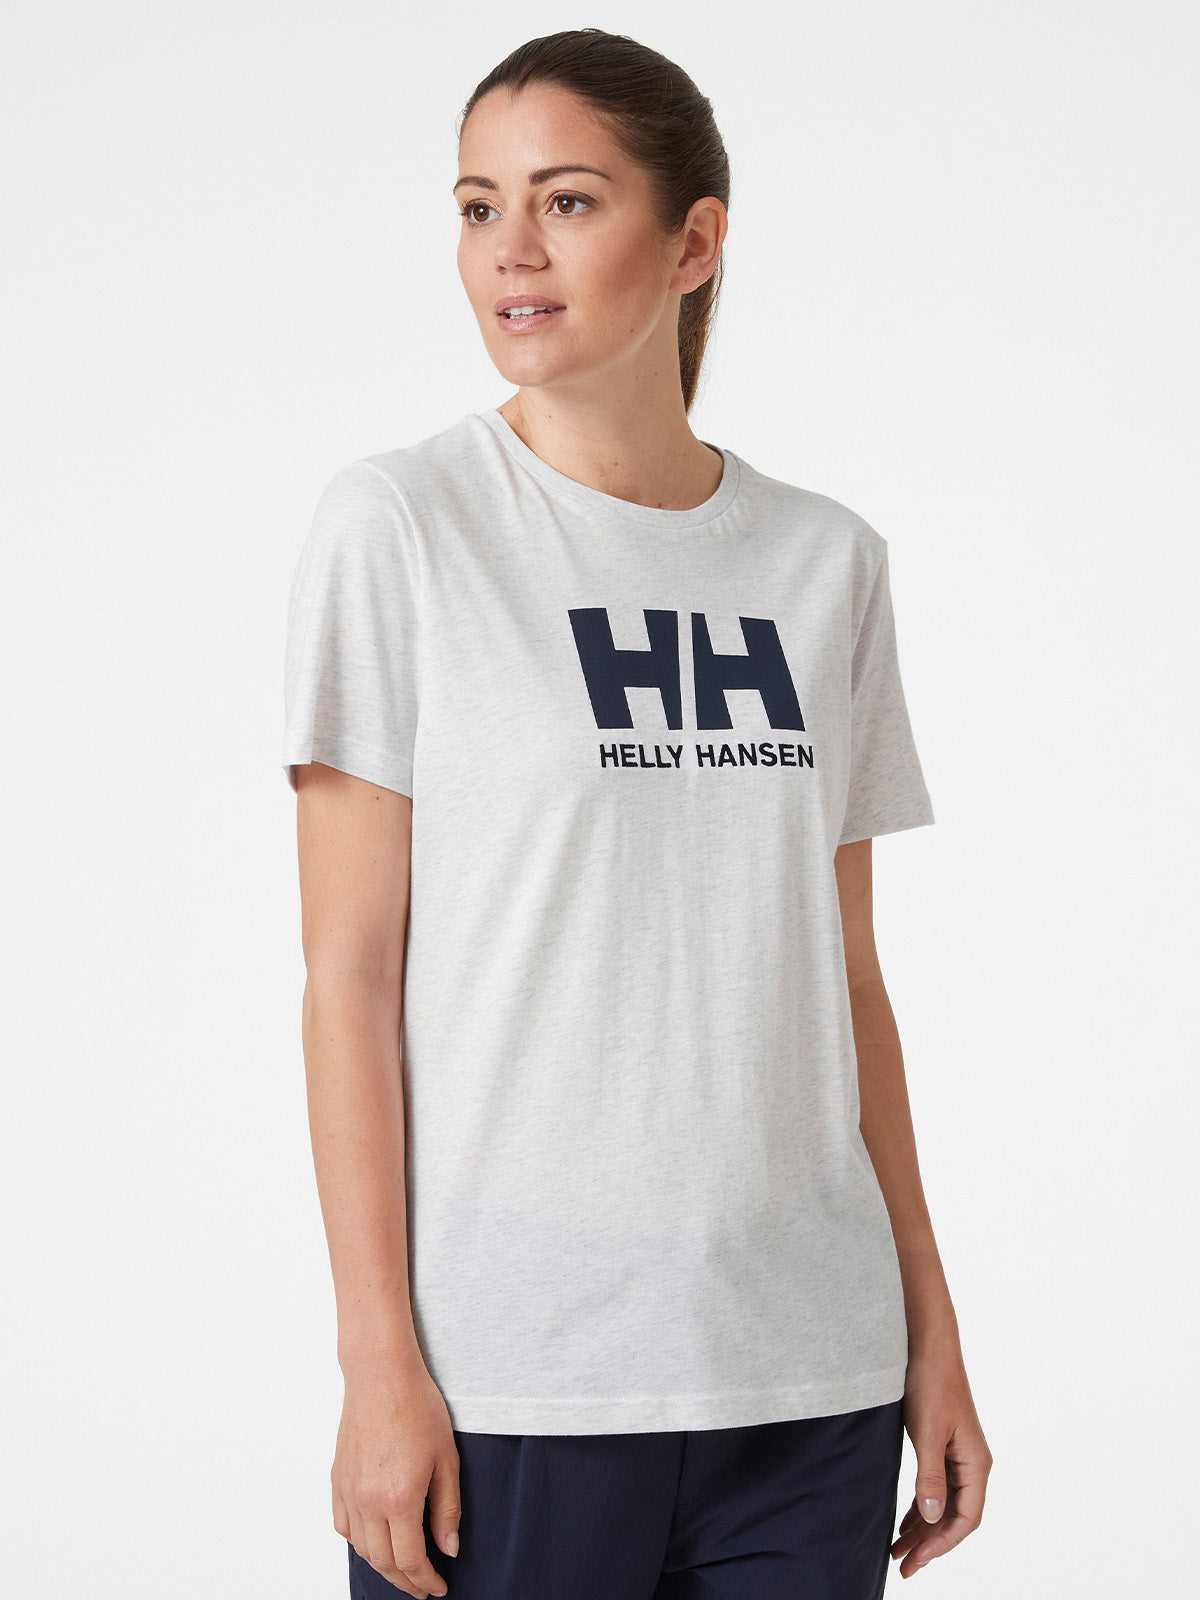 HH Logo T-Shirt for Women